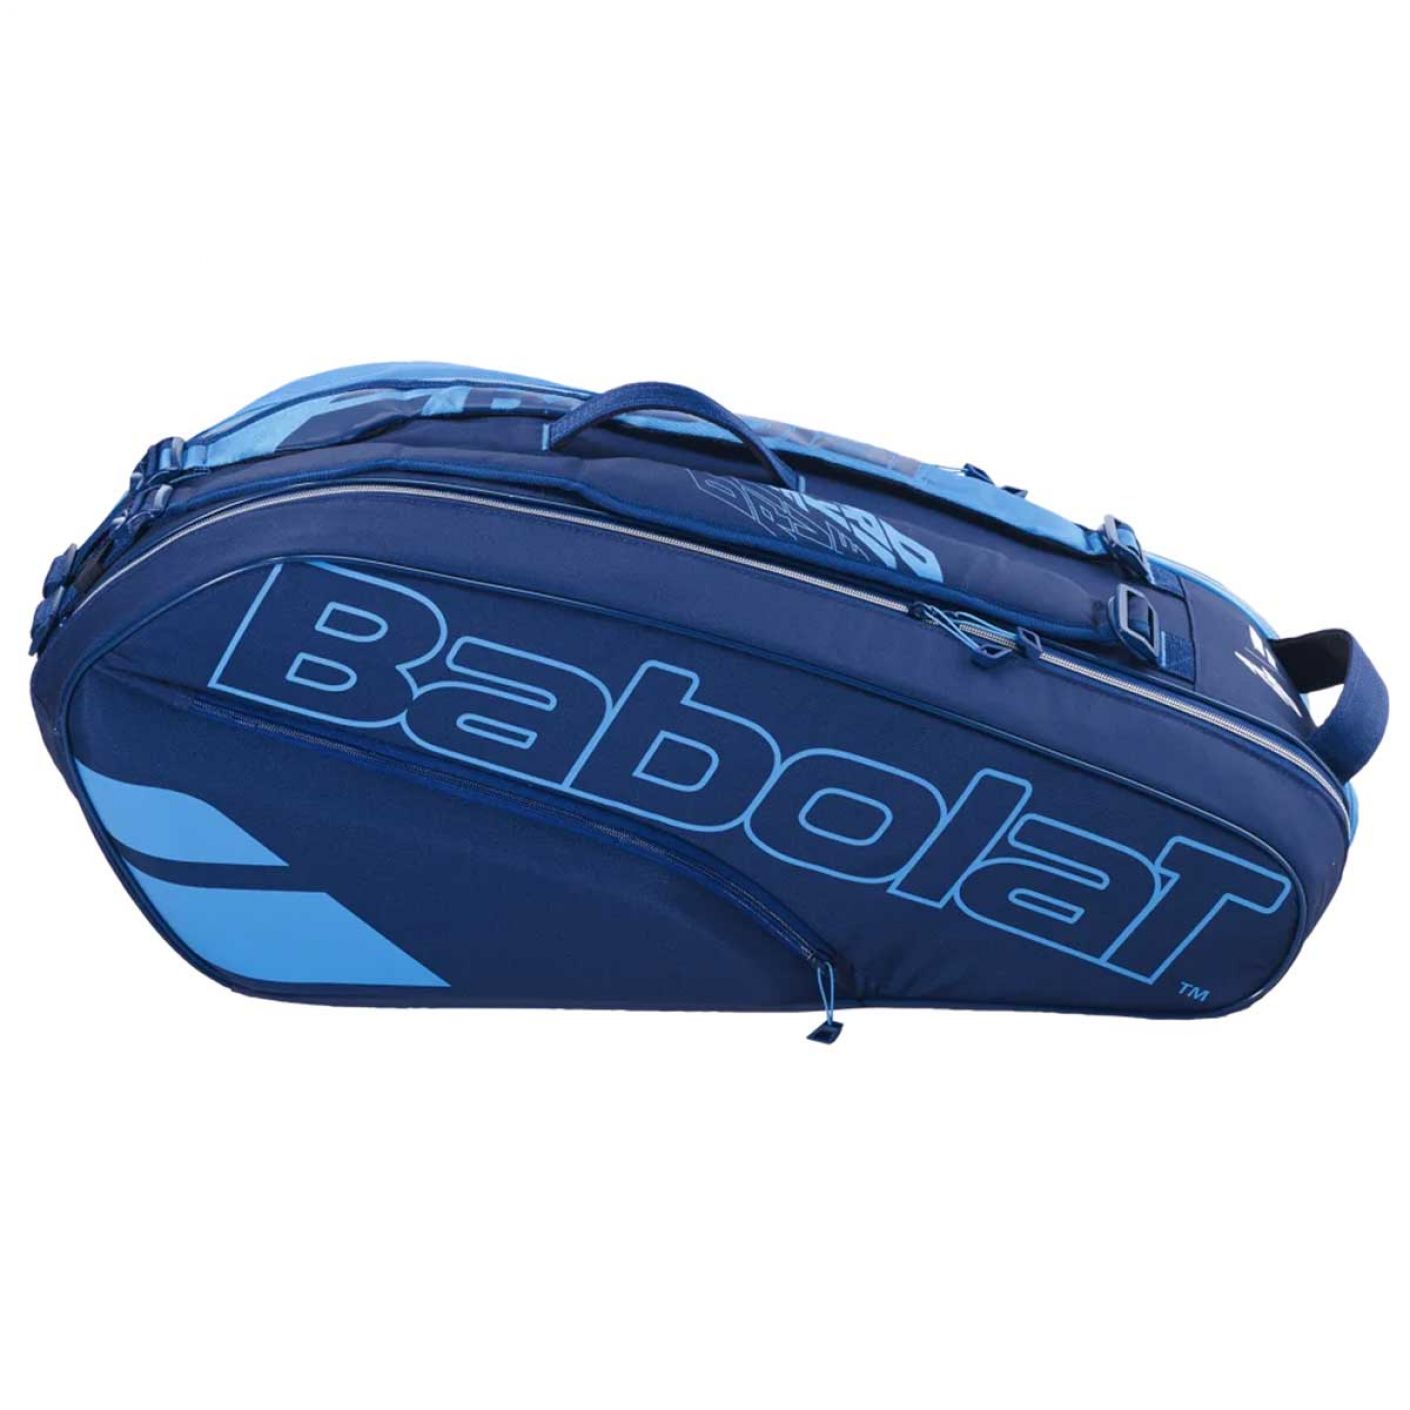 Babolat Rh X 6 Pure Drive Tennis Bag